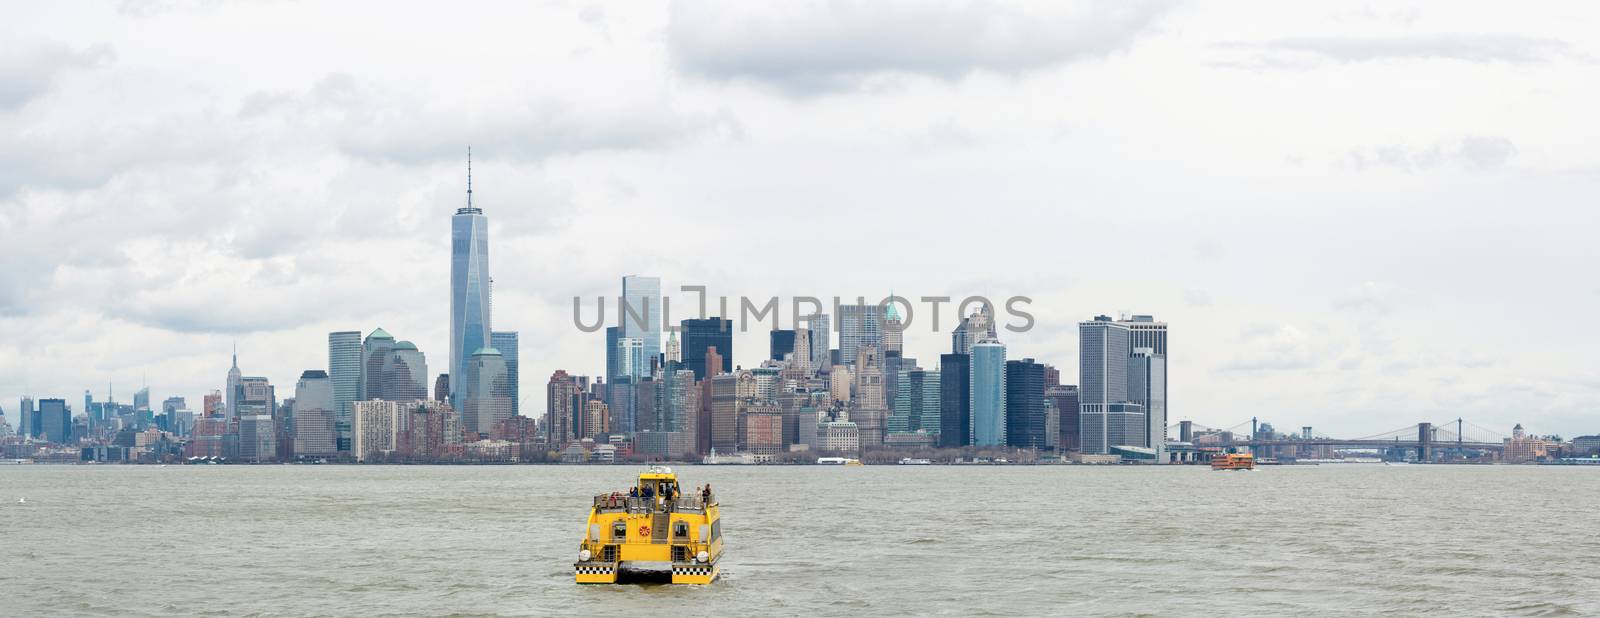 Panorama of New York City by vichie81